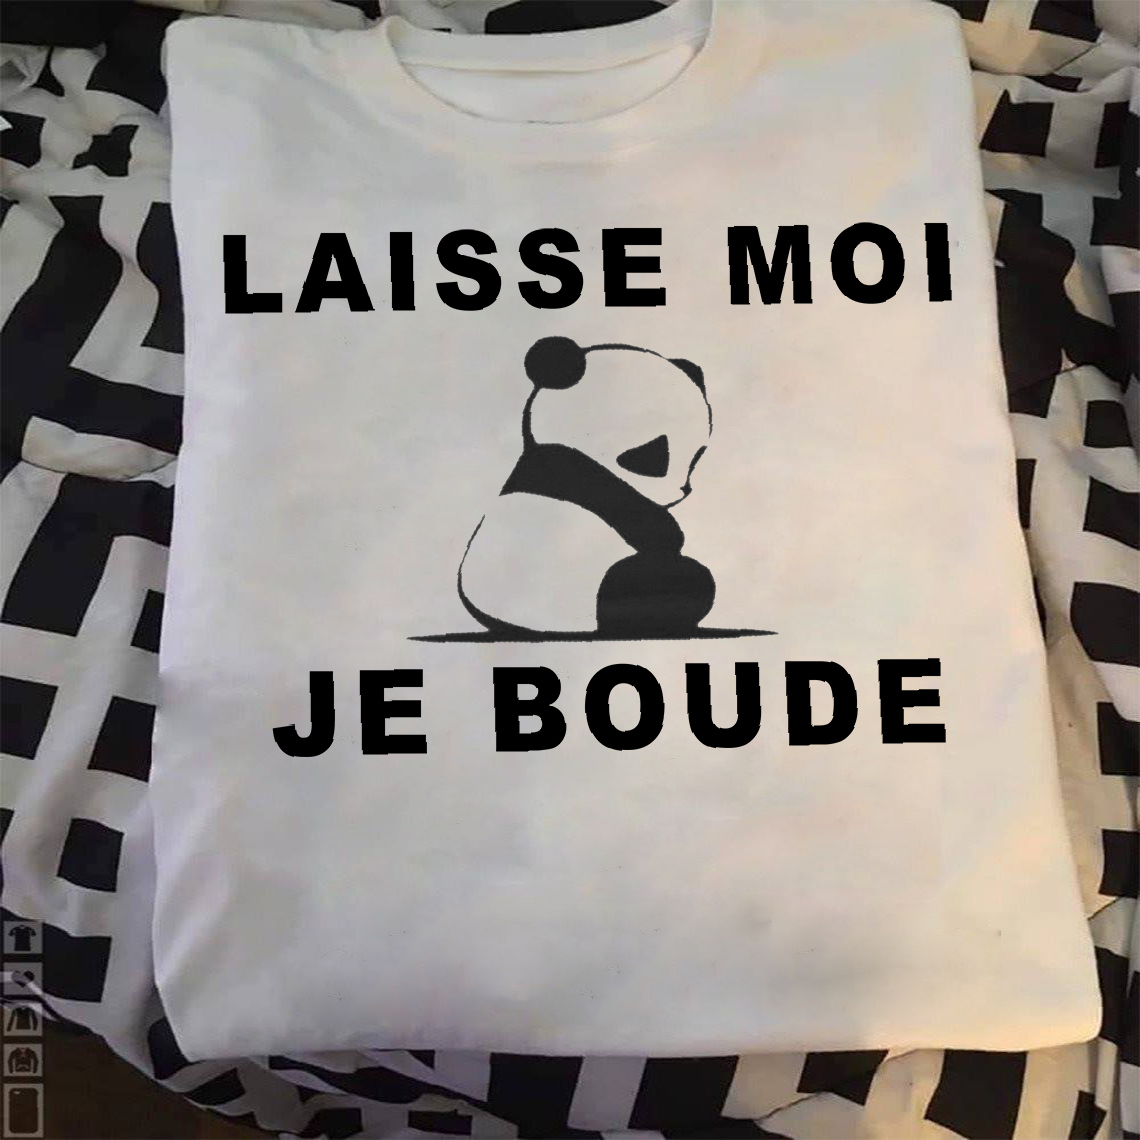 Laisse mou je boude - Sad panda, gift for panda lover, panda laisse mou je boude